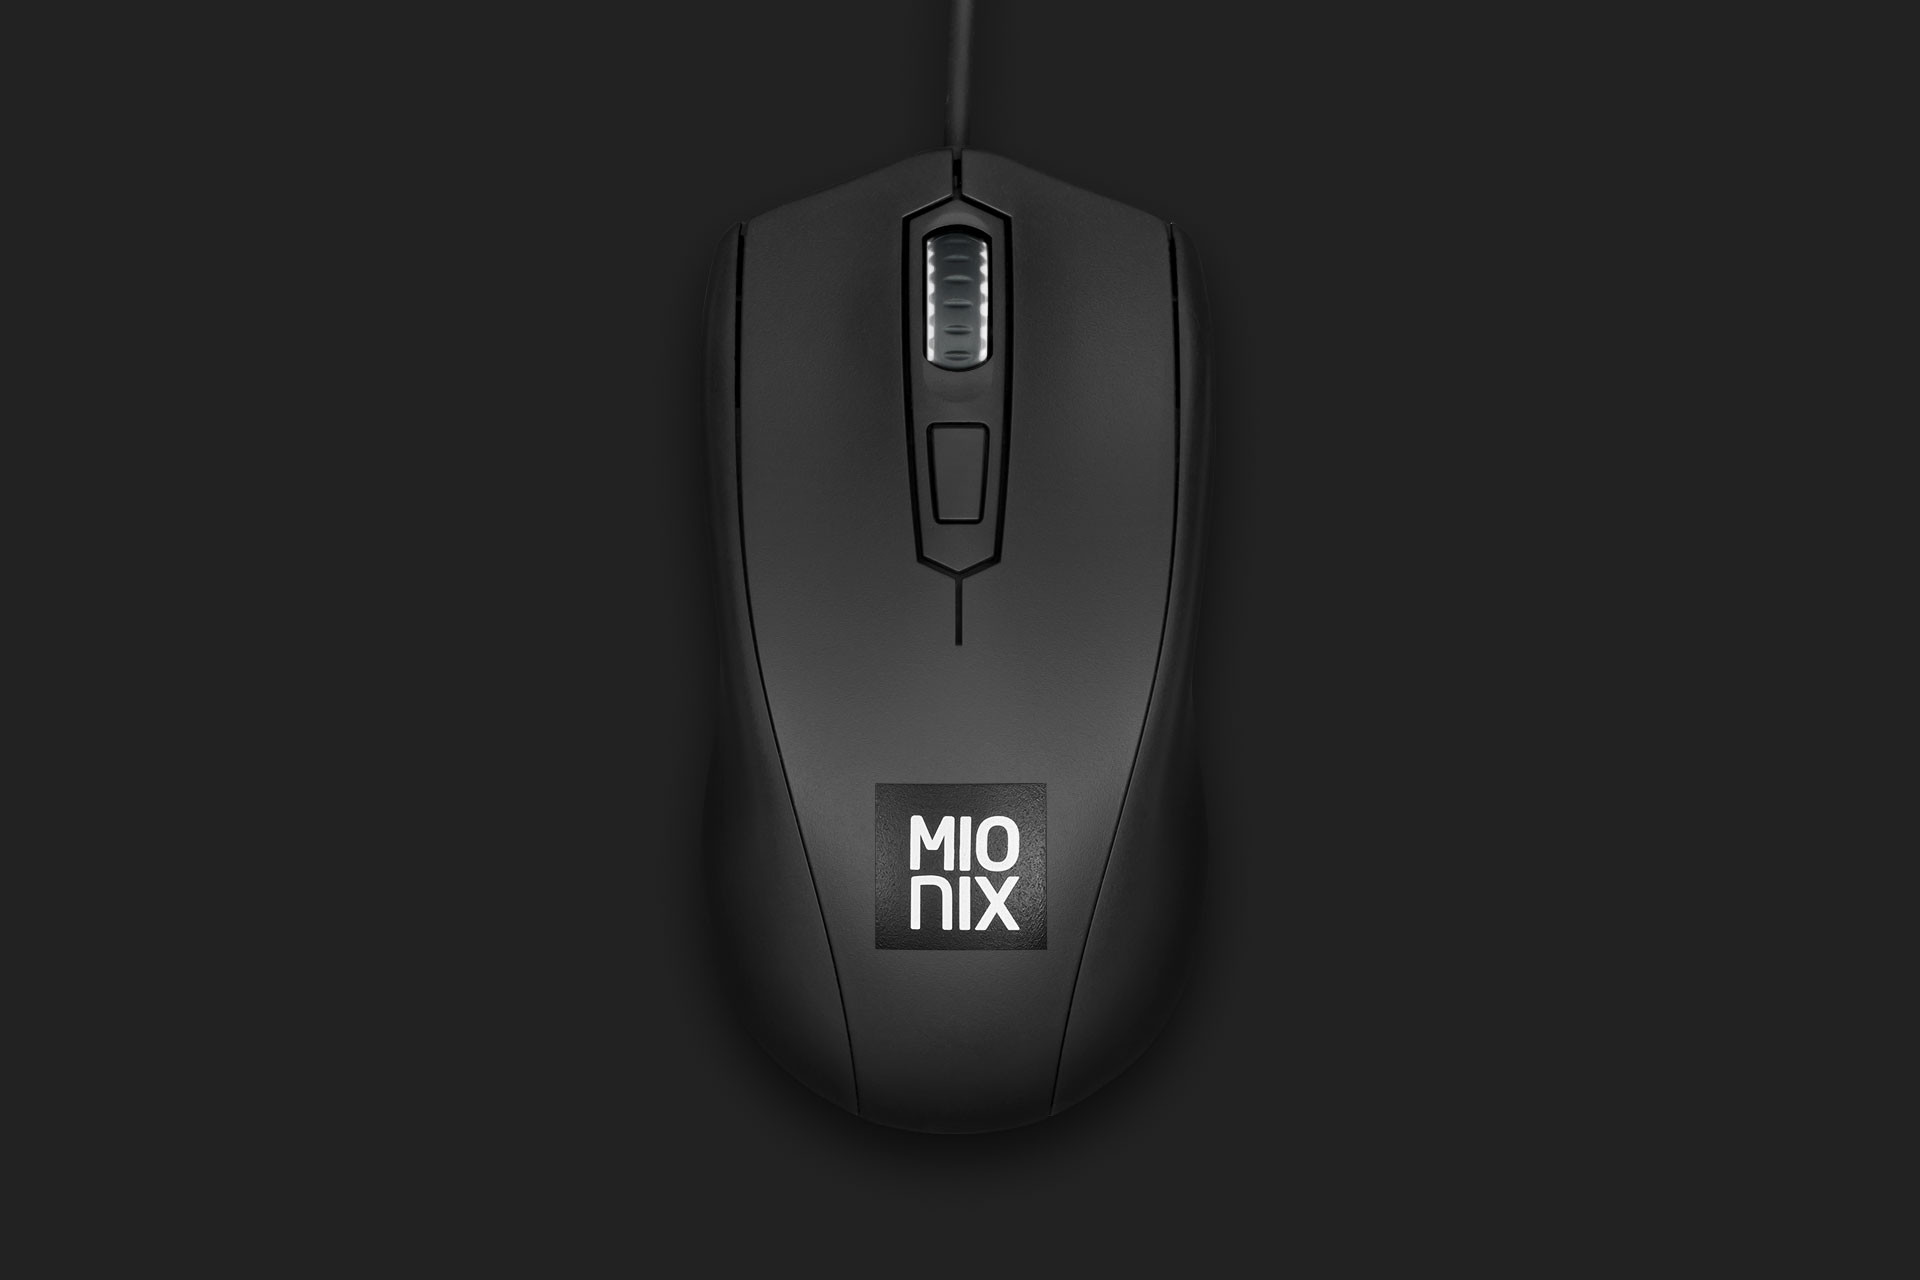 Mionix Avior Shark Fin Ambidextrous Optical Gaming Mouse Gray